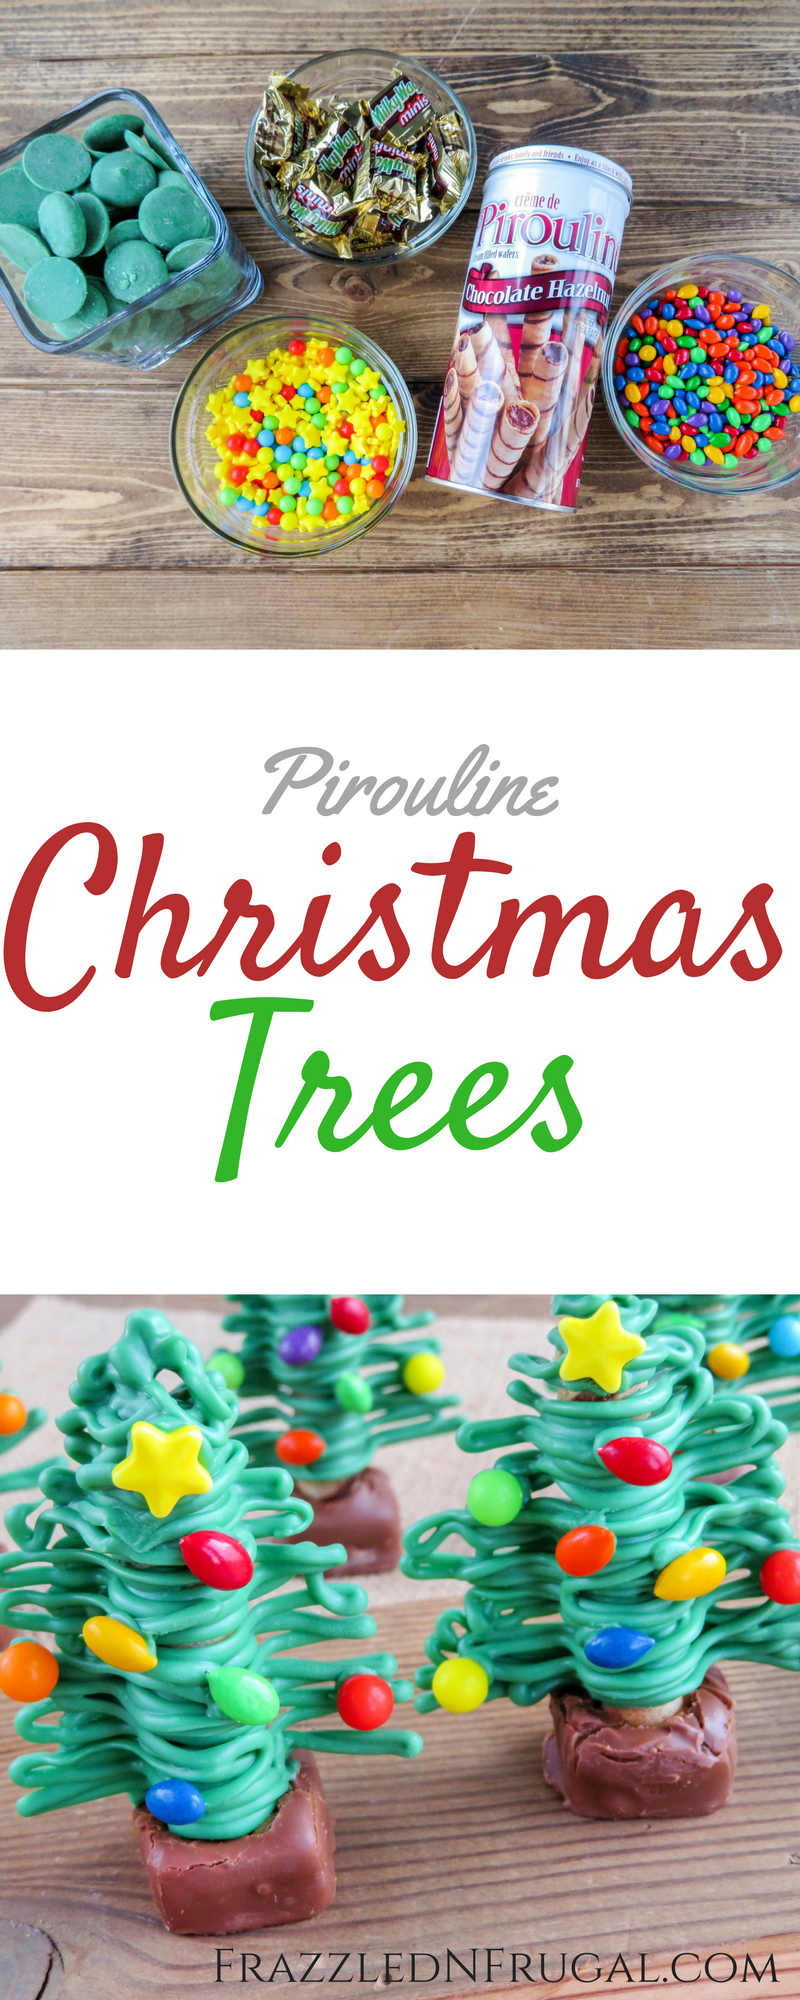 Pirouline Christmas Trees